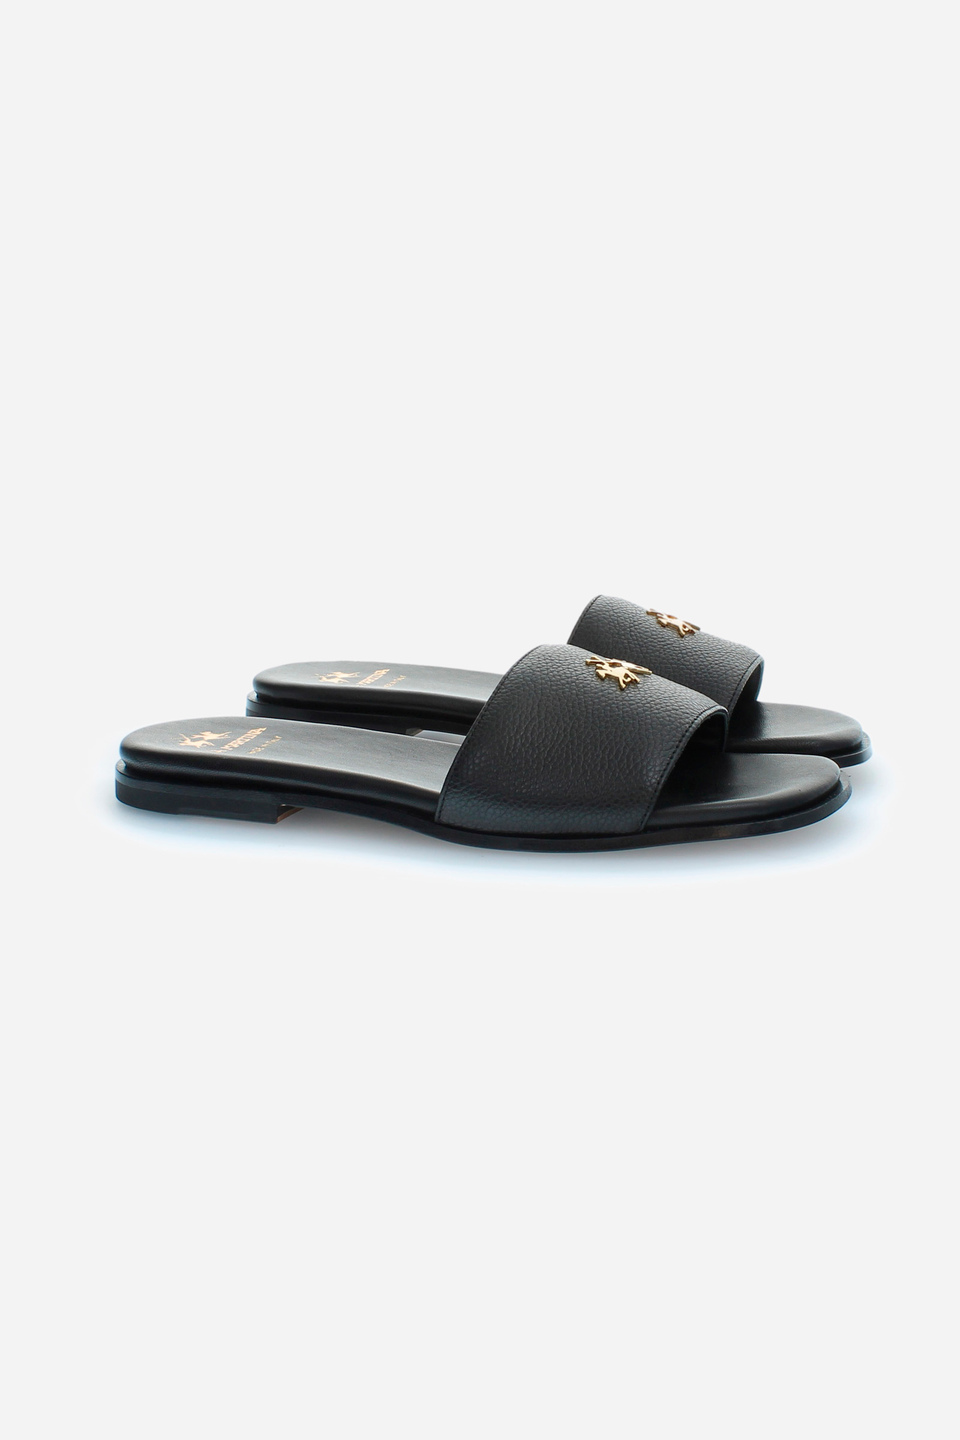 Women's sandals in leather | La Martina - Official Online Shop